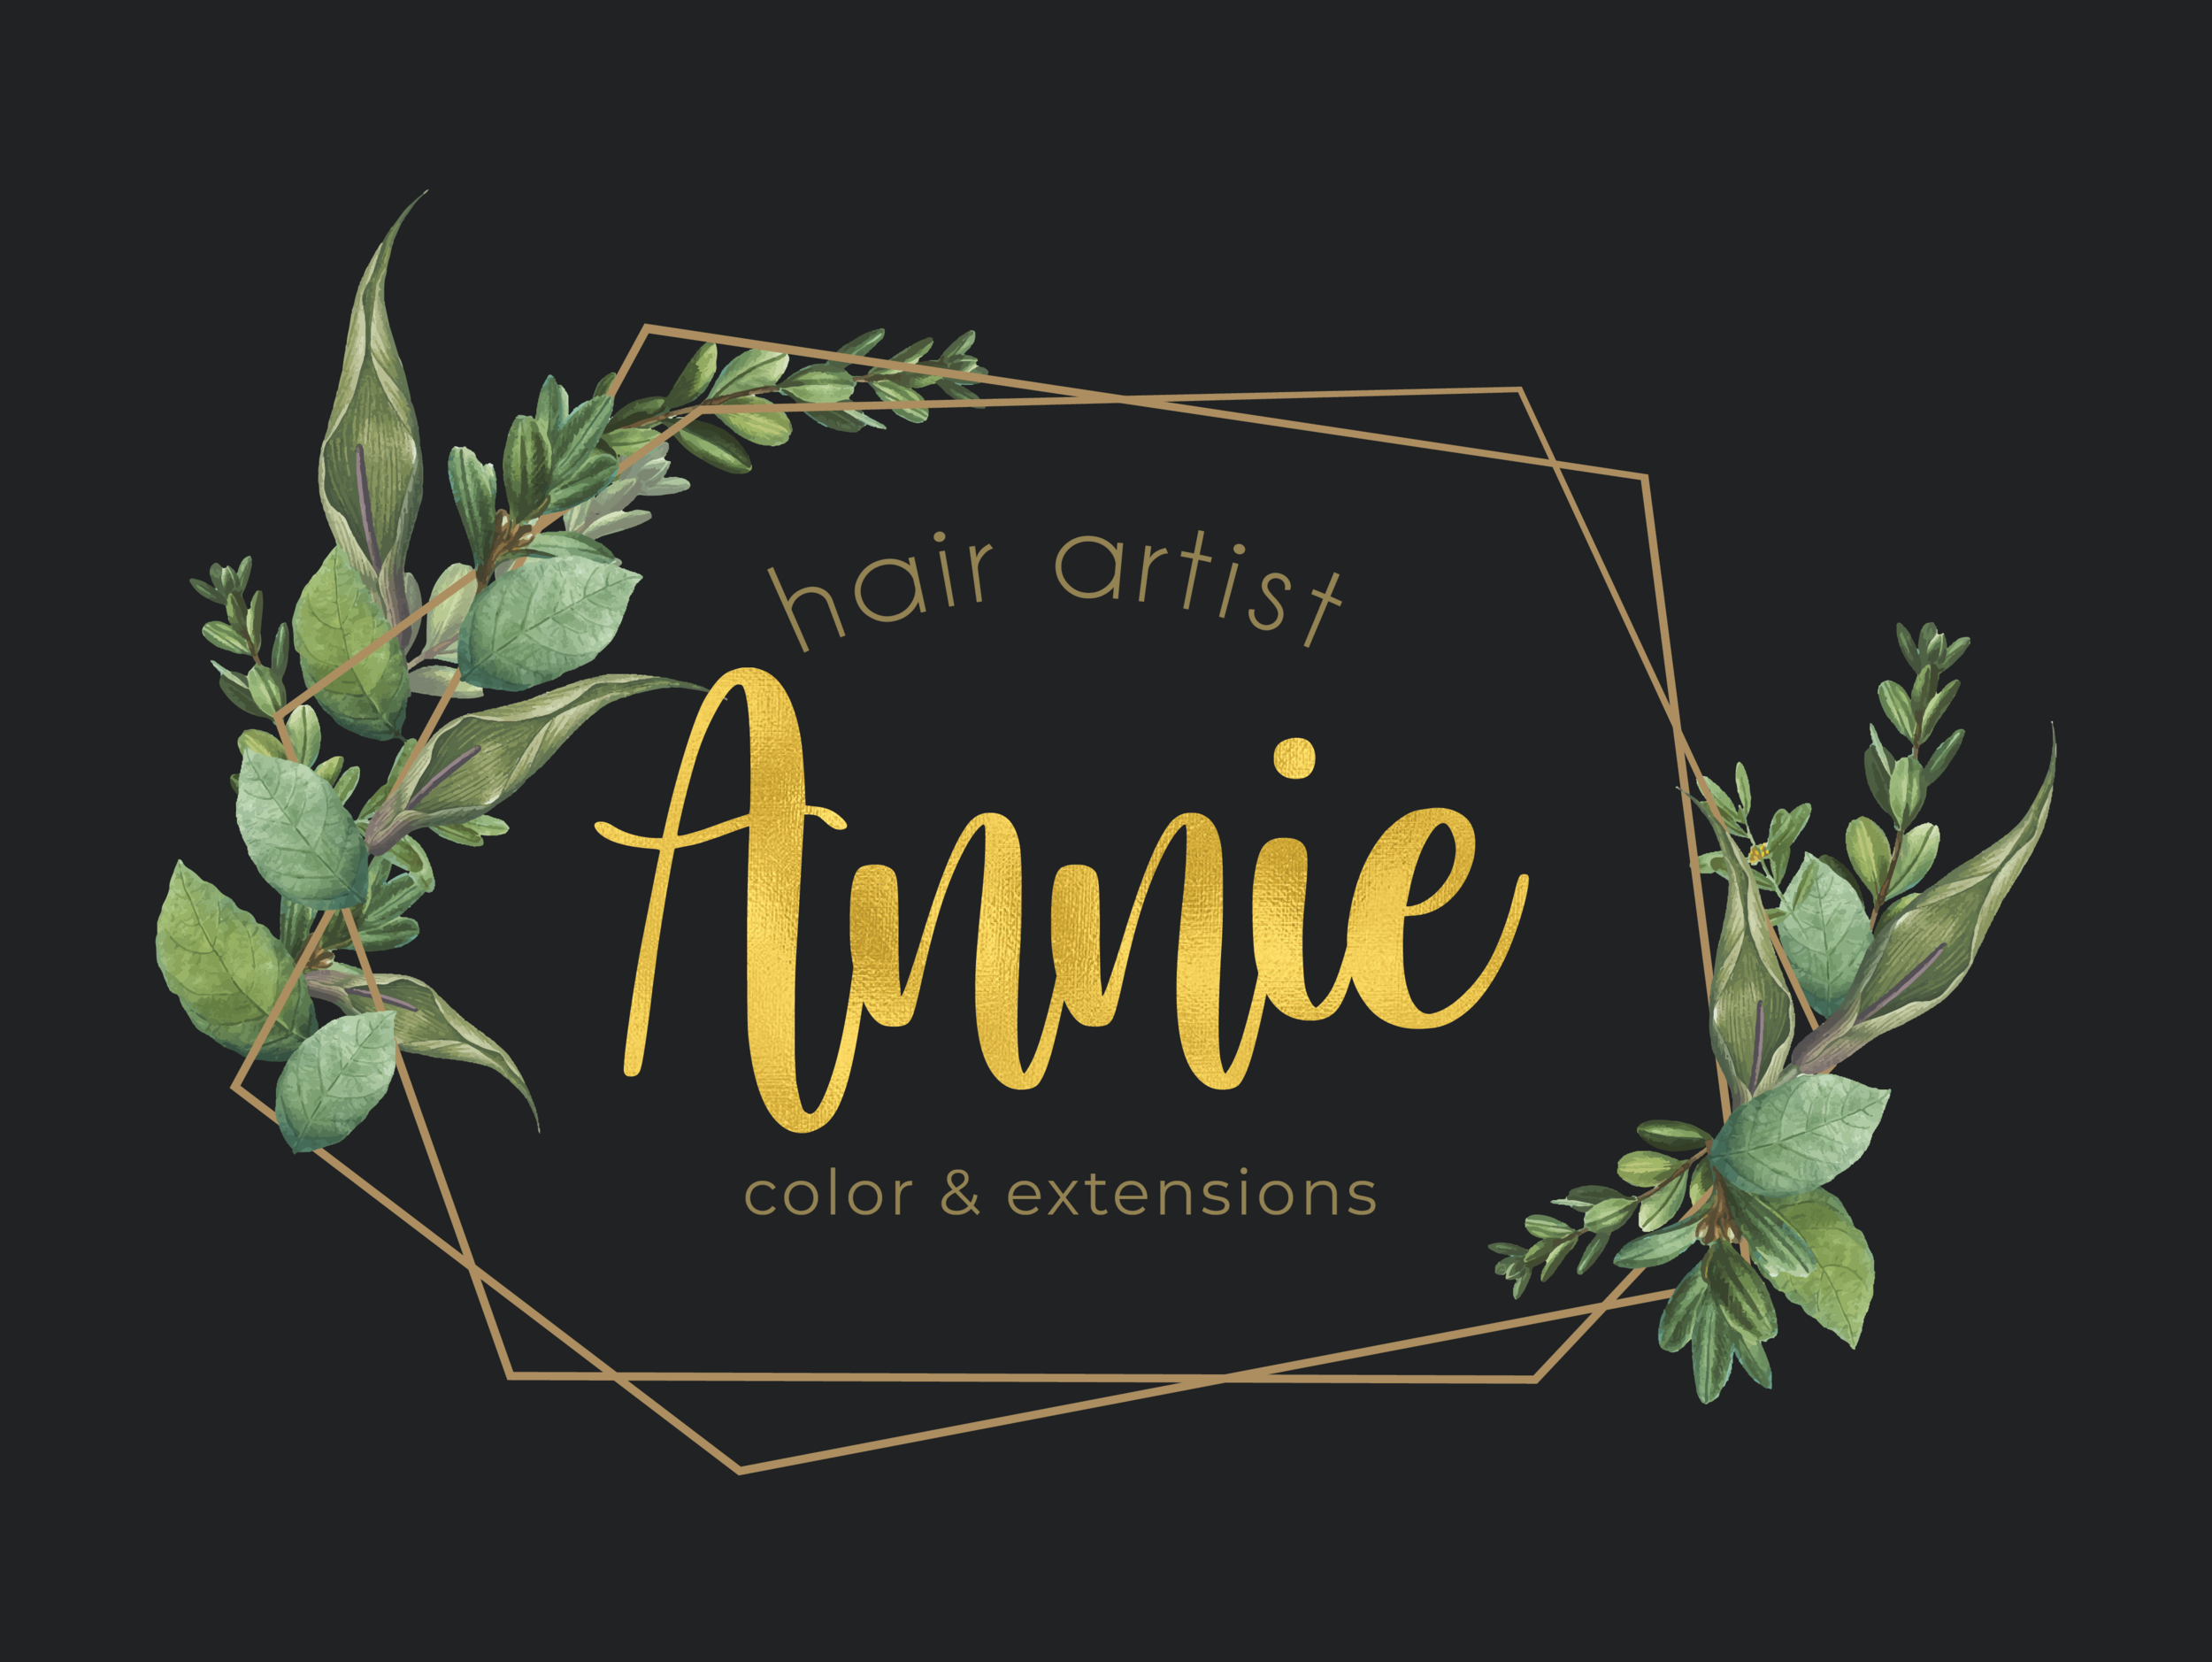 hair artist annie websiteAsset 3.png